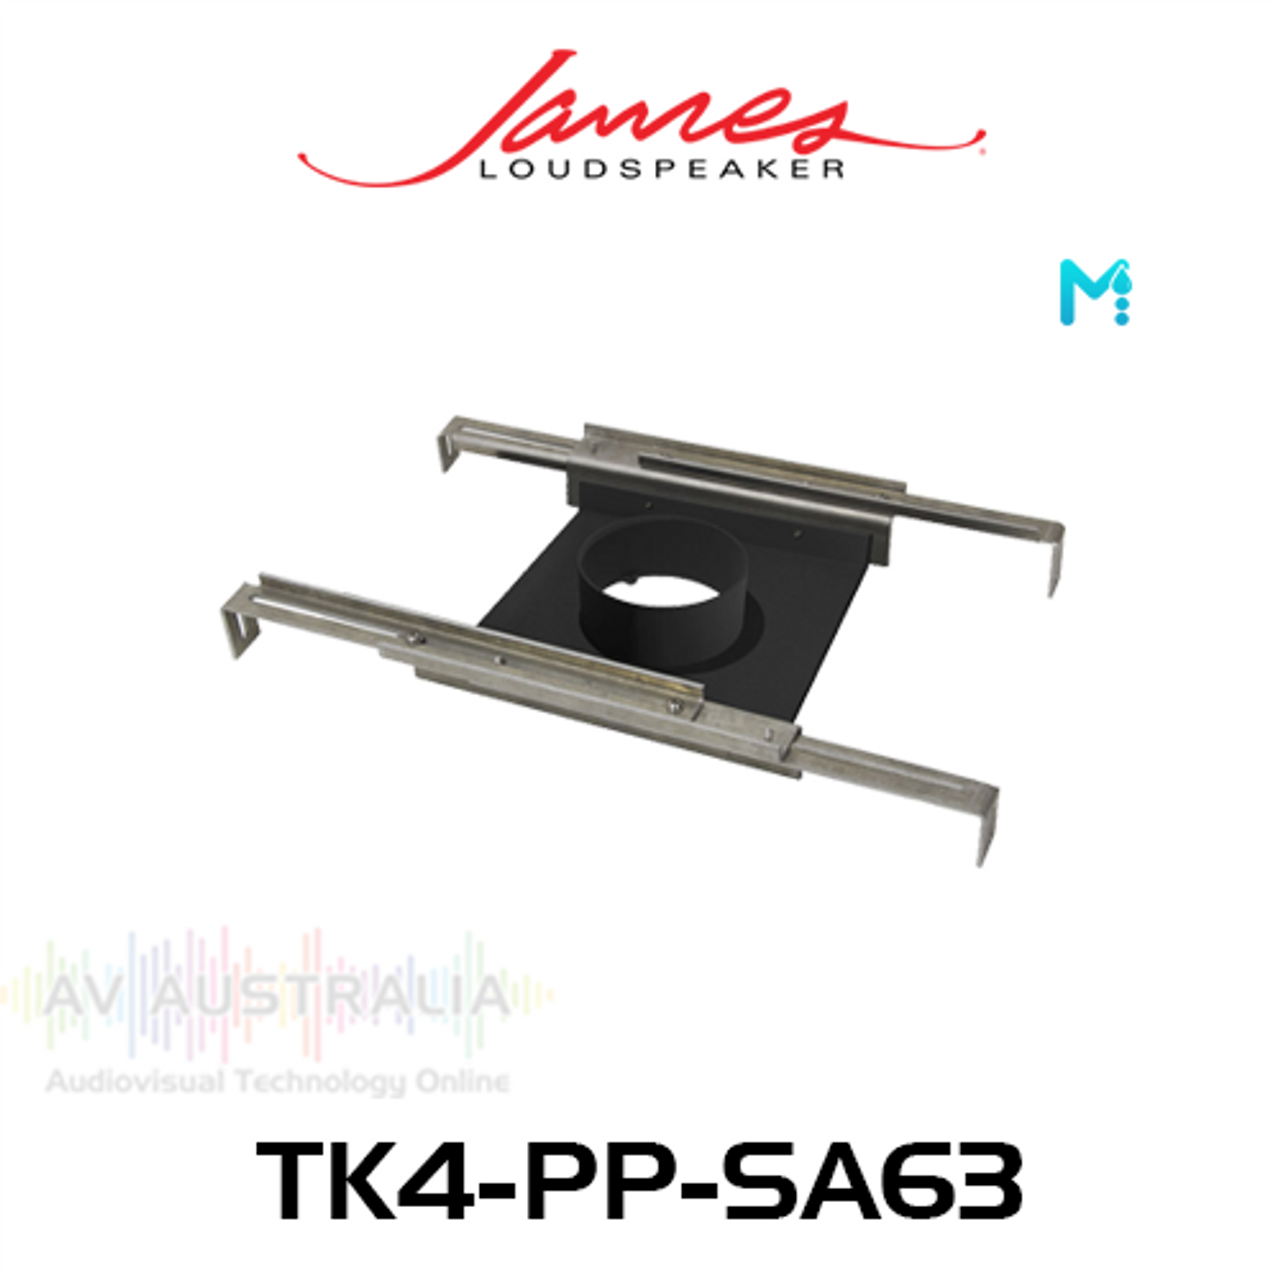 James Loudspeaker TK4-PP-SA63 4" Small Aperture Style Ceiling Trim Adapter